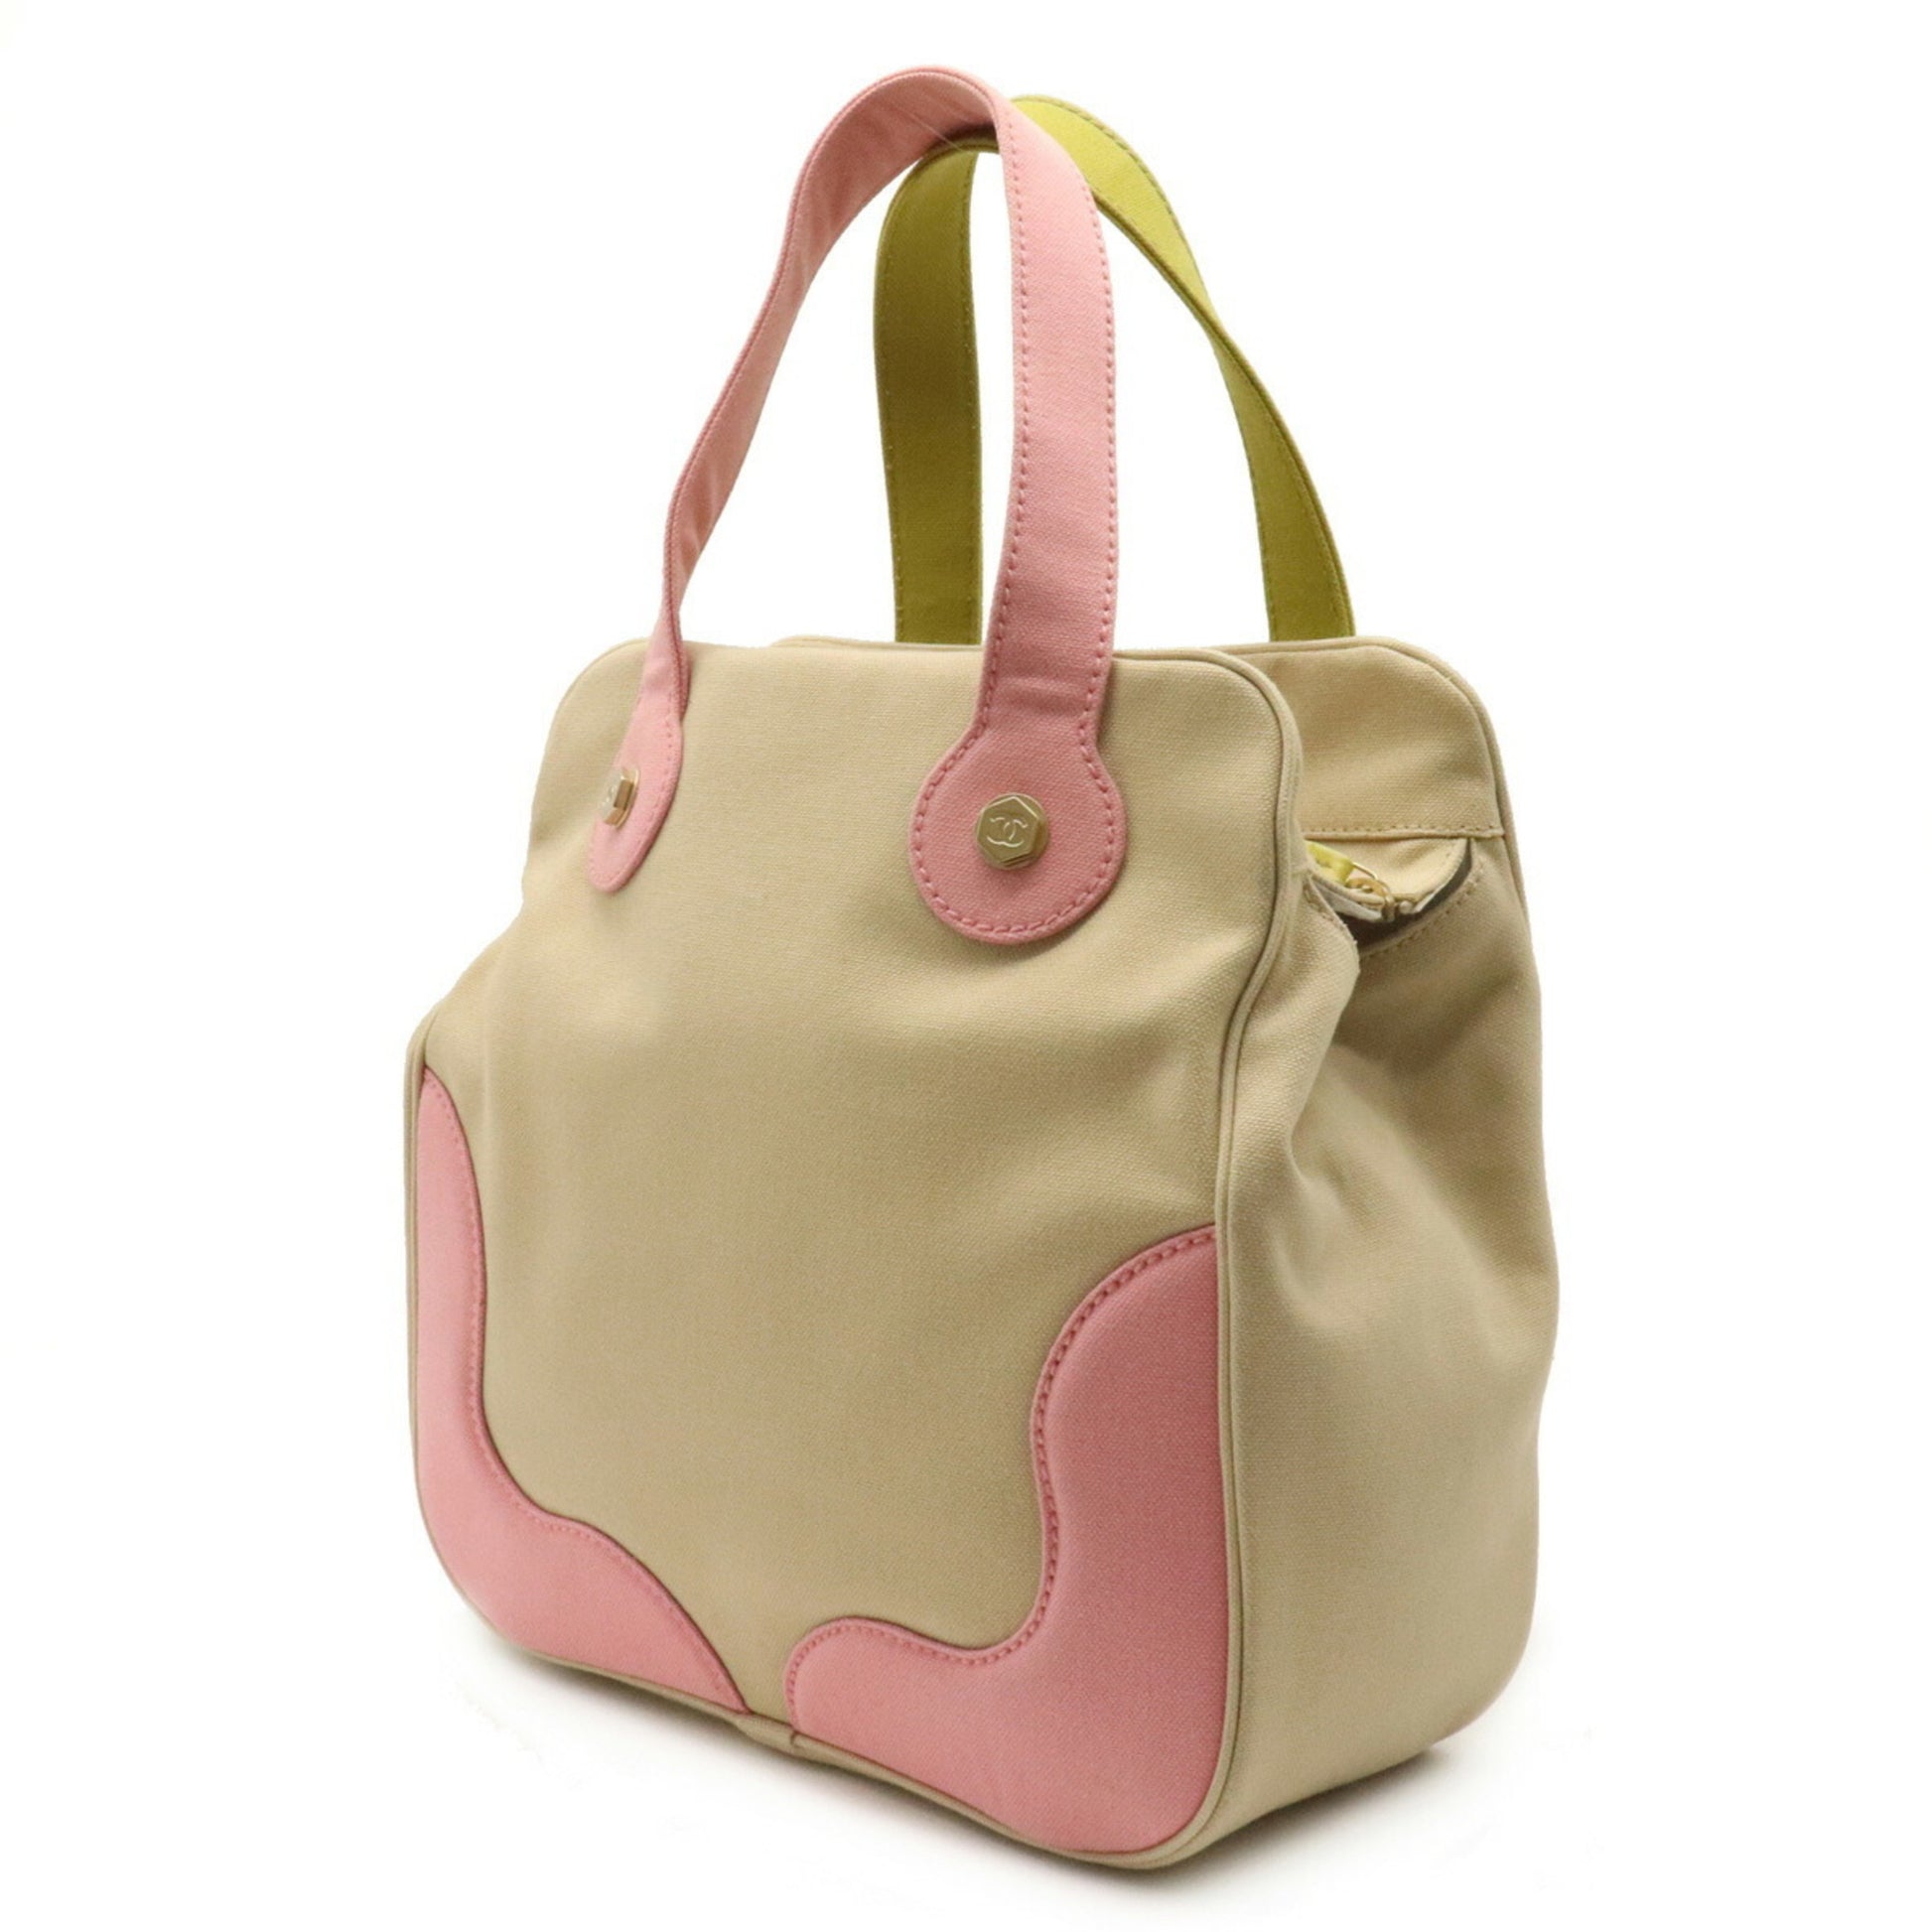 Chanel Marshmallow Handbag Tote Bag Cocomark Canvas Beige Green Pink A